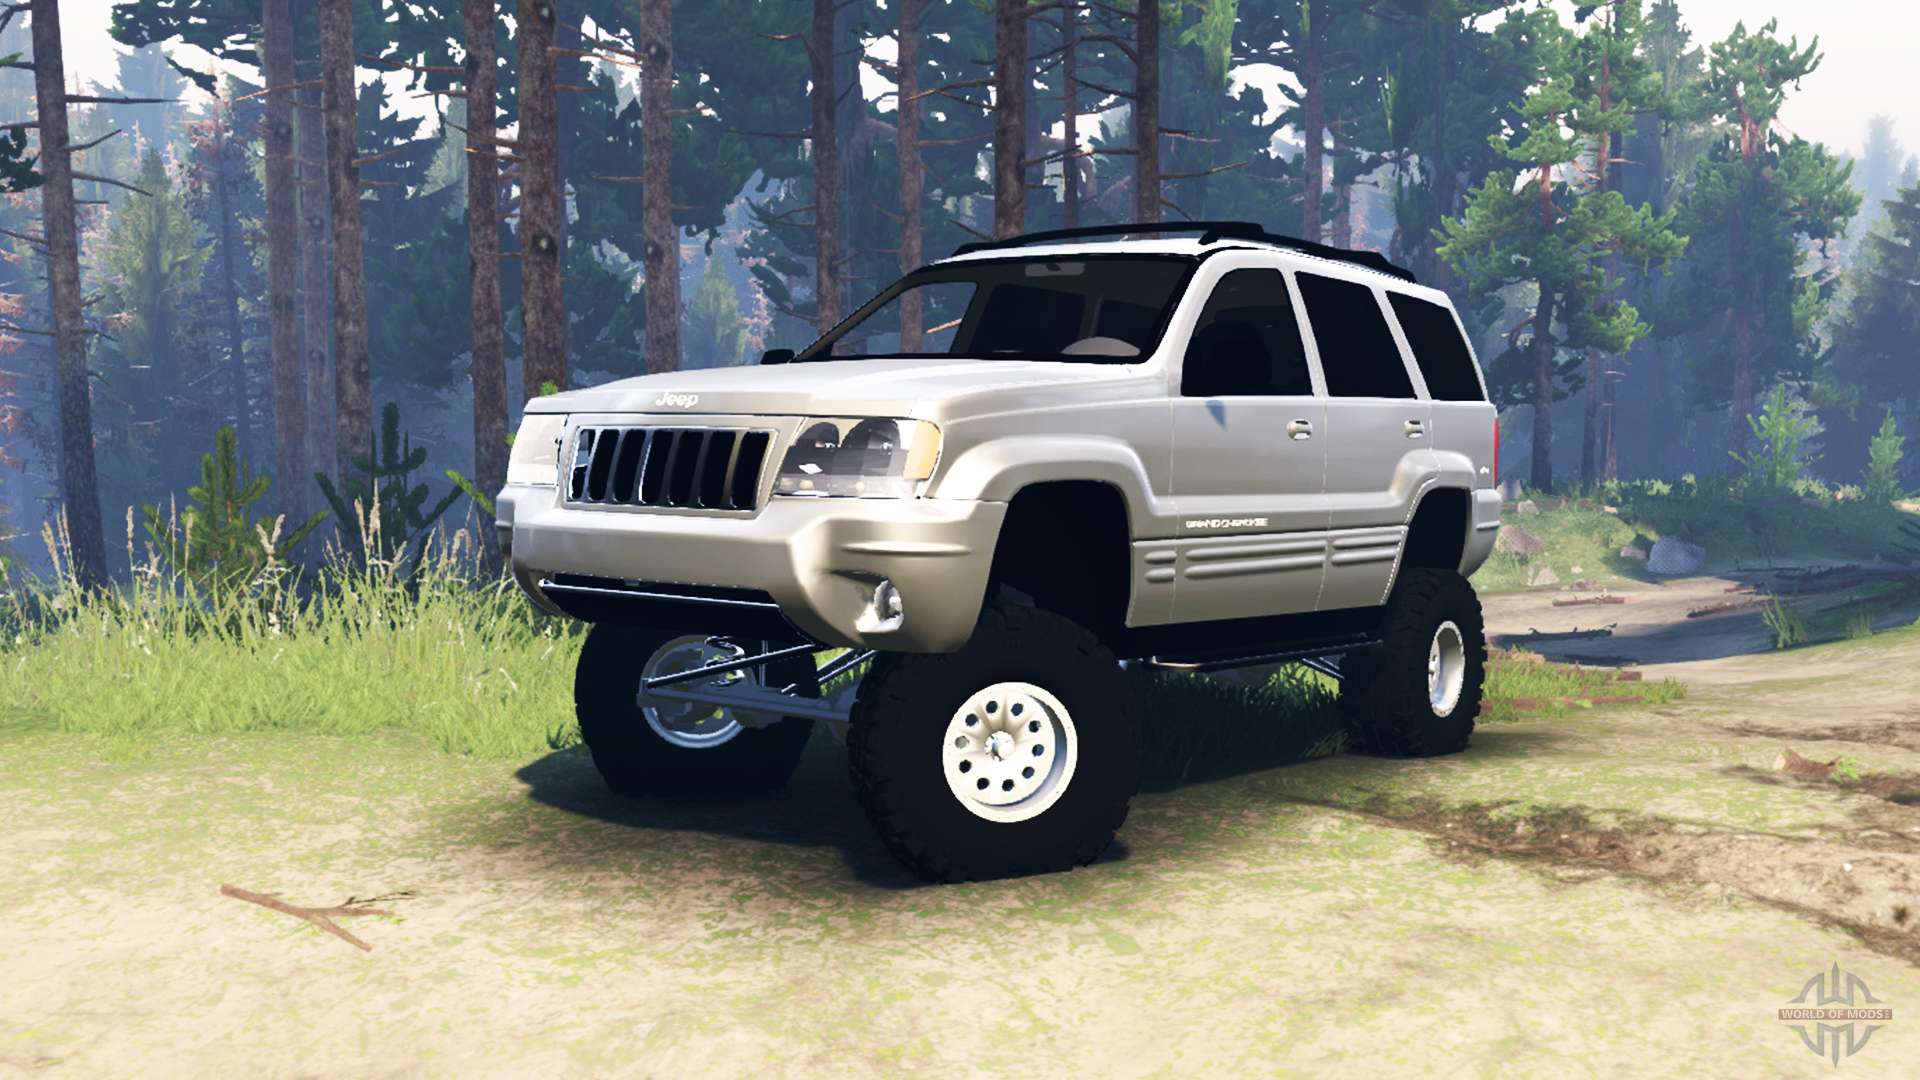 Jeep Grand Cherokee (WJ) 2004 para Spin Tires